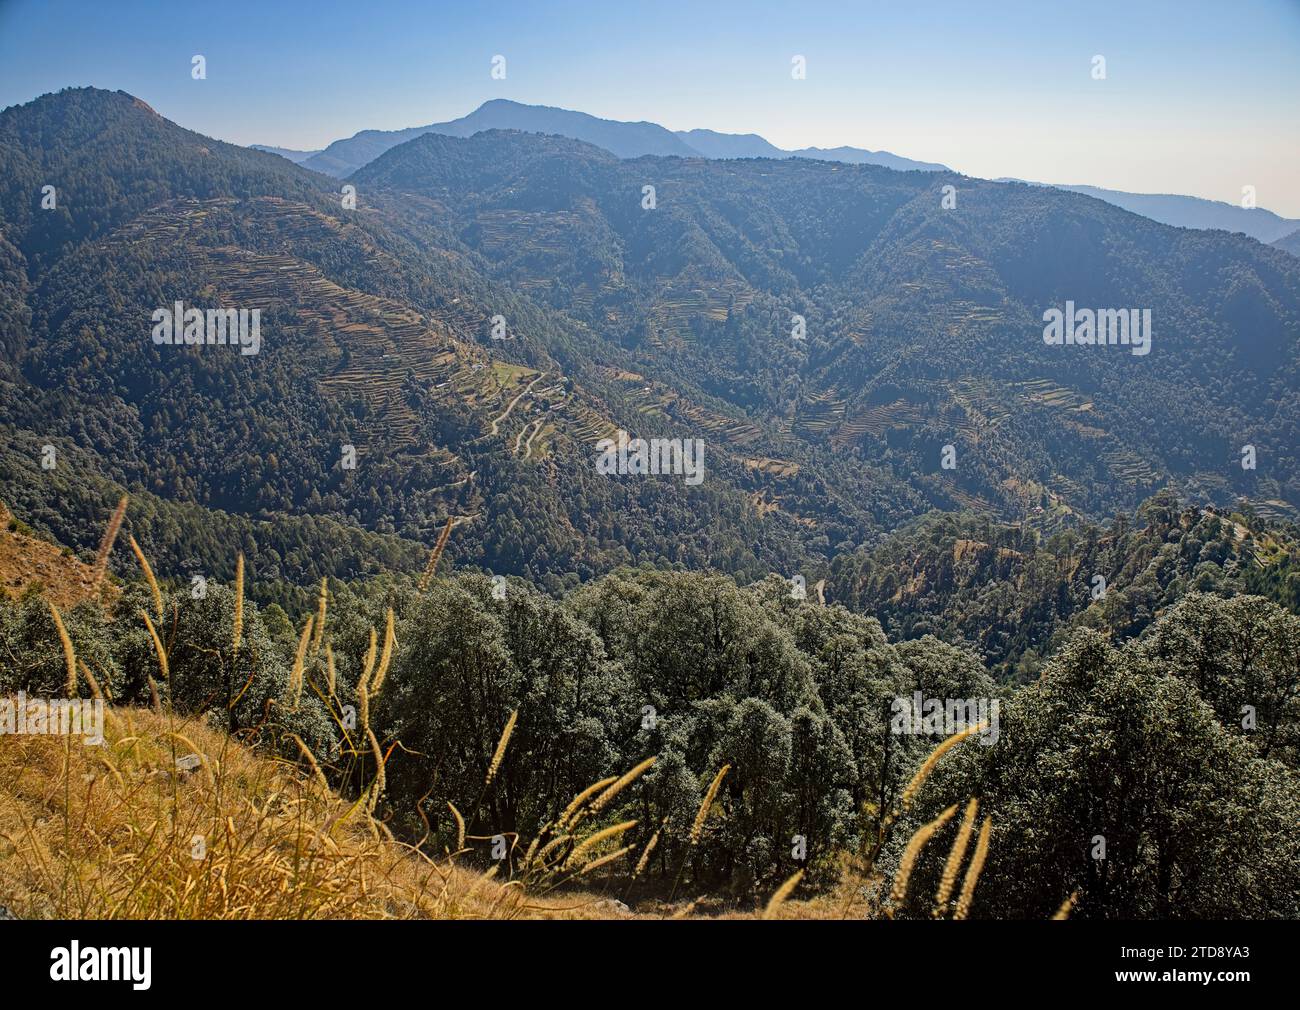 The terraced foothills of the Himalayas near Nainital, Uttarakhand, India. Stock Photo